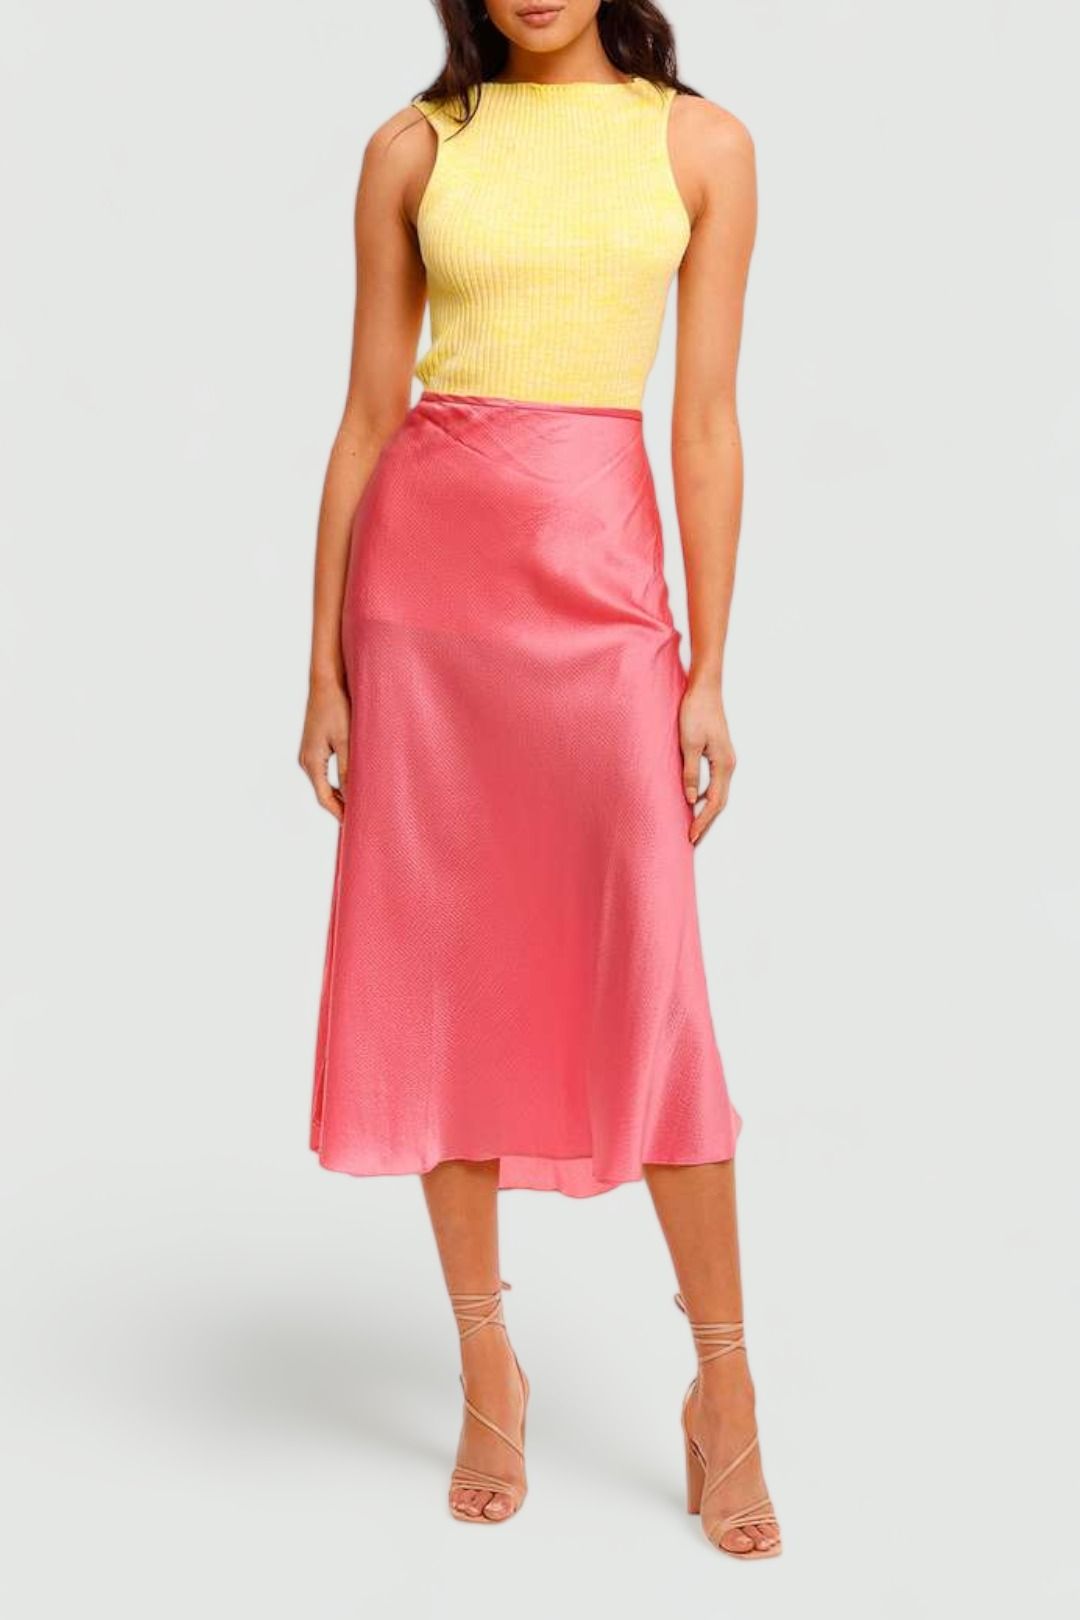 Ginia Cardi Silk Pink Skirt midi